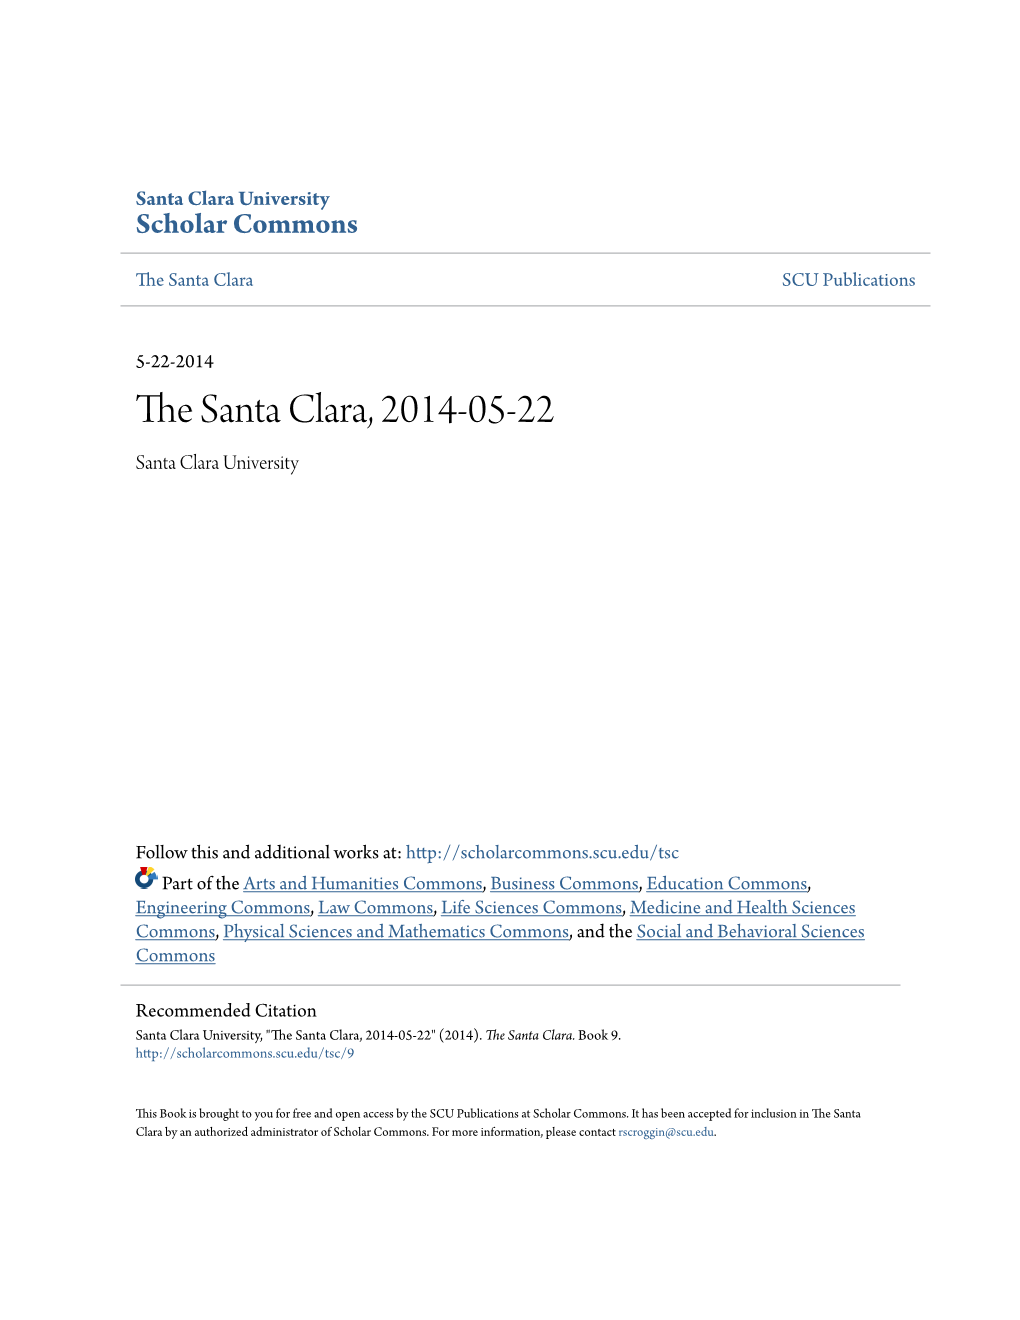 The Santa Clara, 2014-05-22